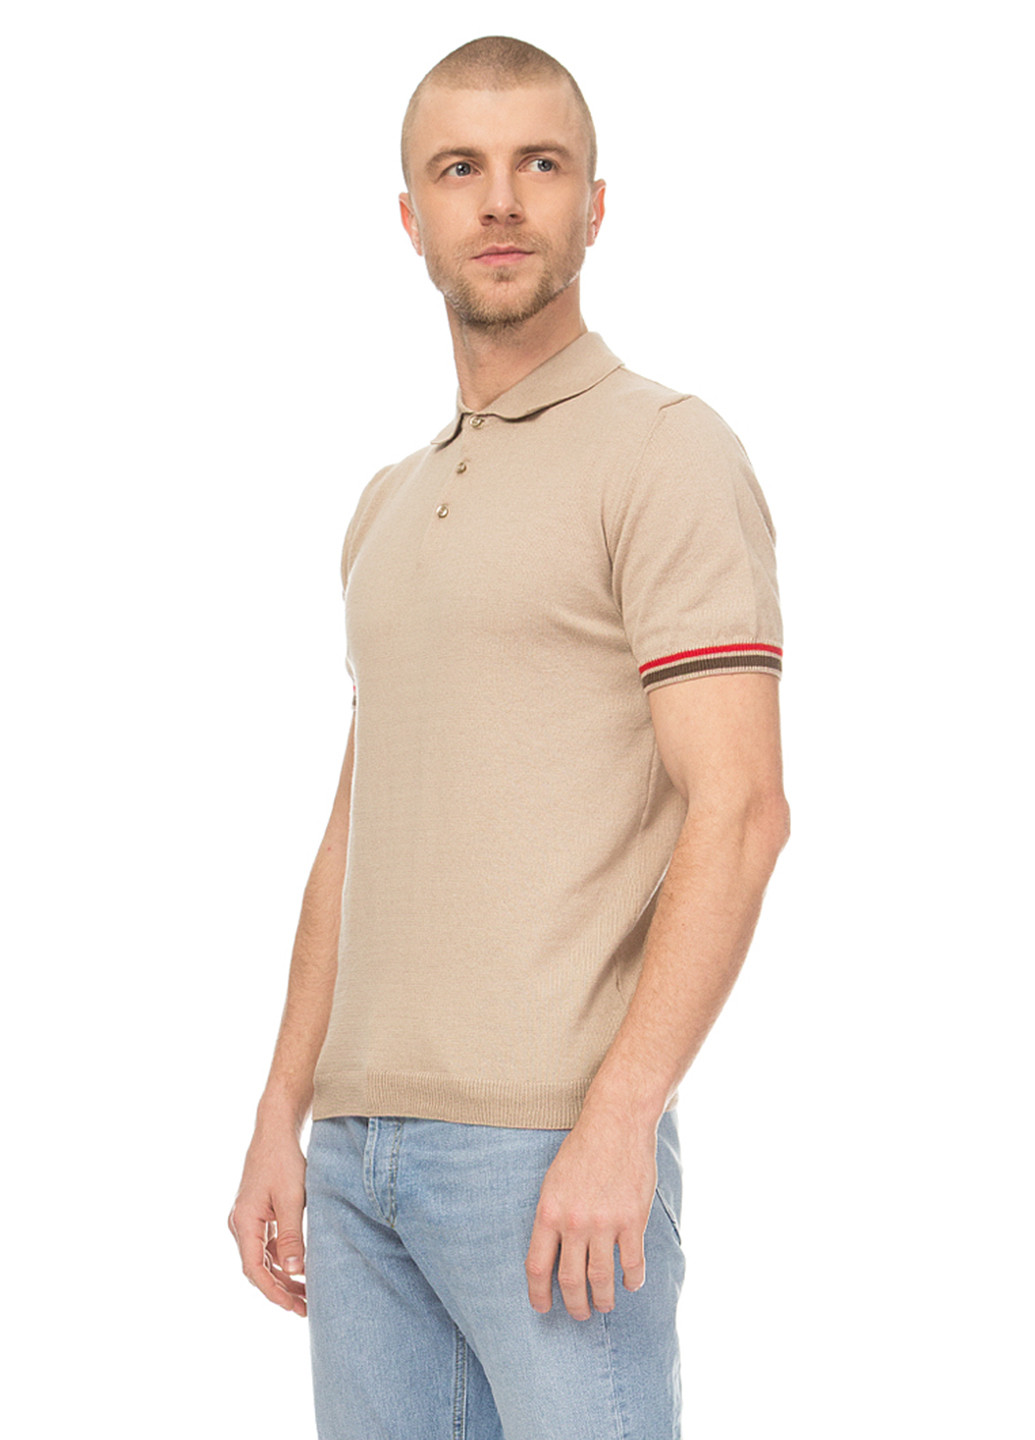 Светло-бежевая футболка-поло для мужчин VD One однотонная